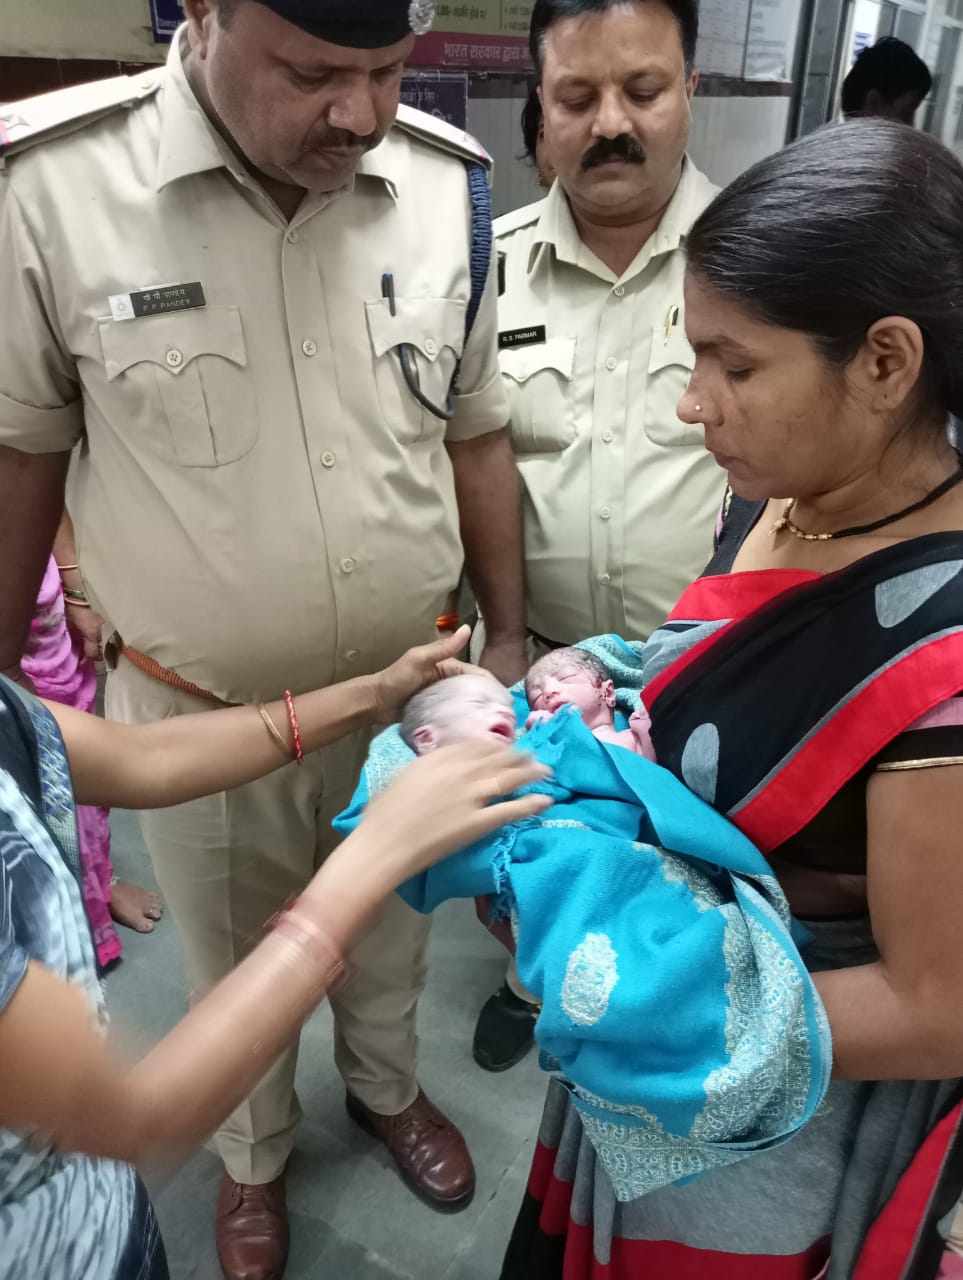 Woman gave birth to twins at Sagar railway station